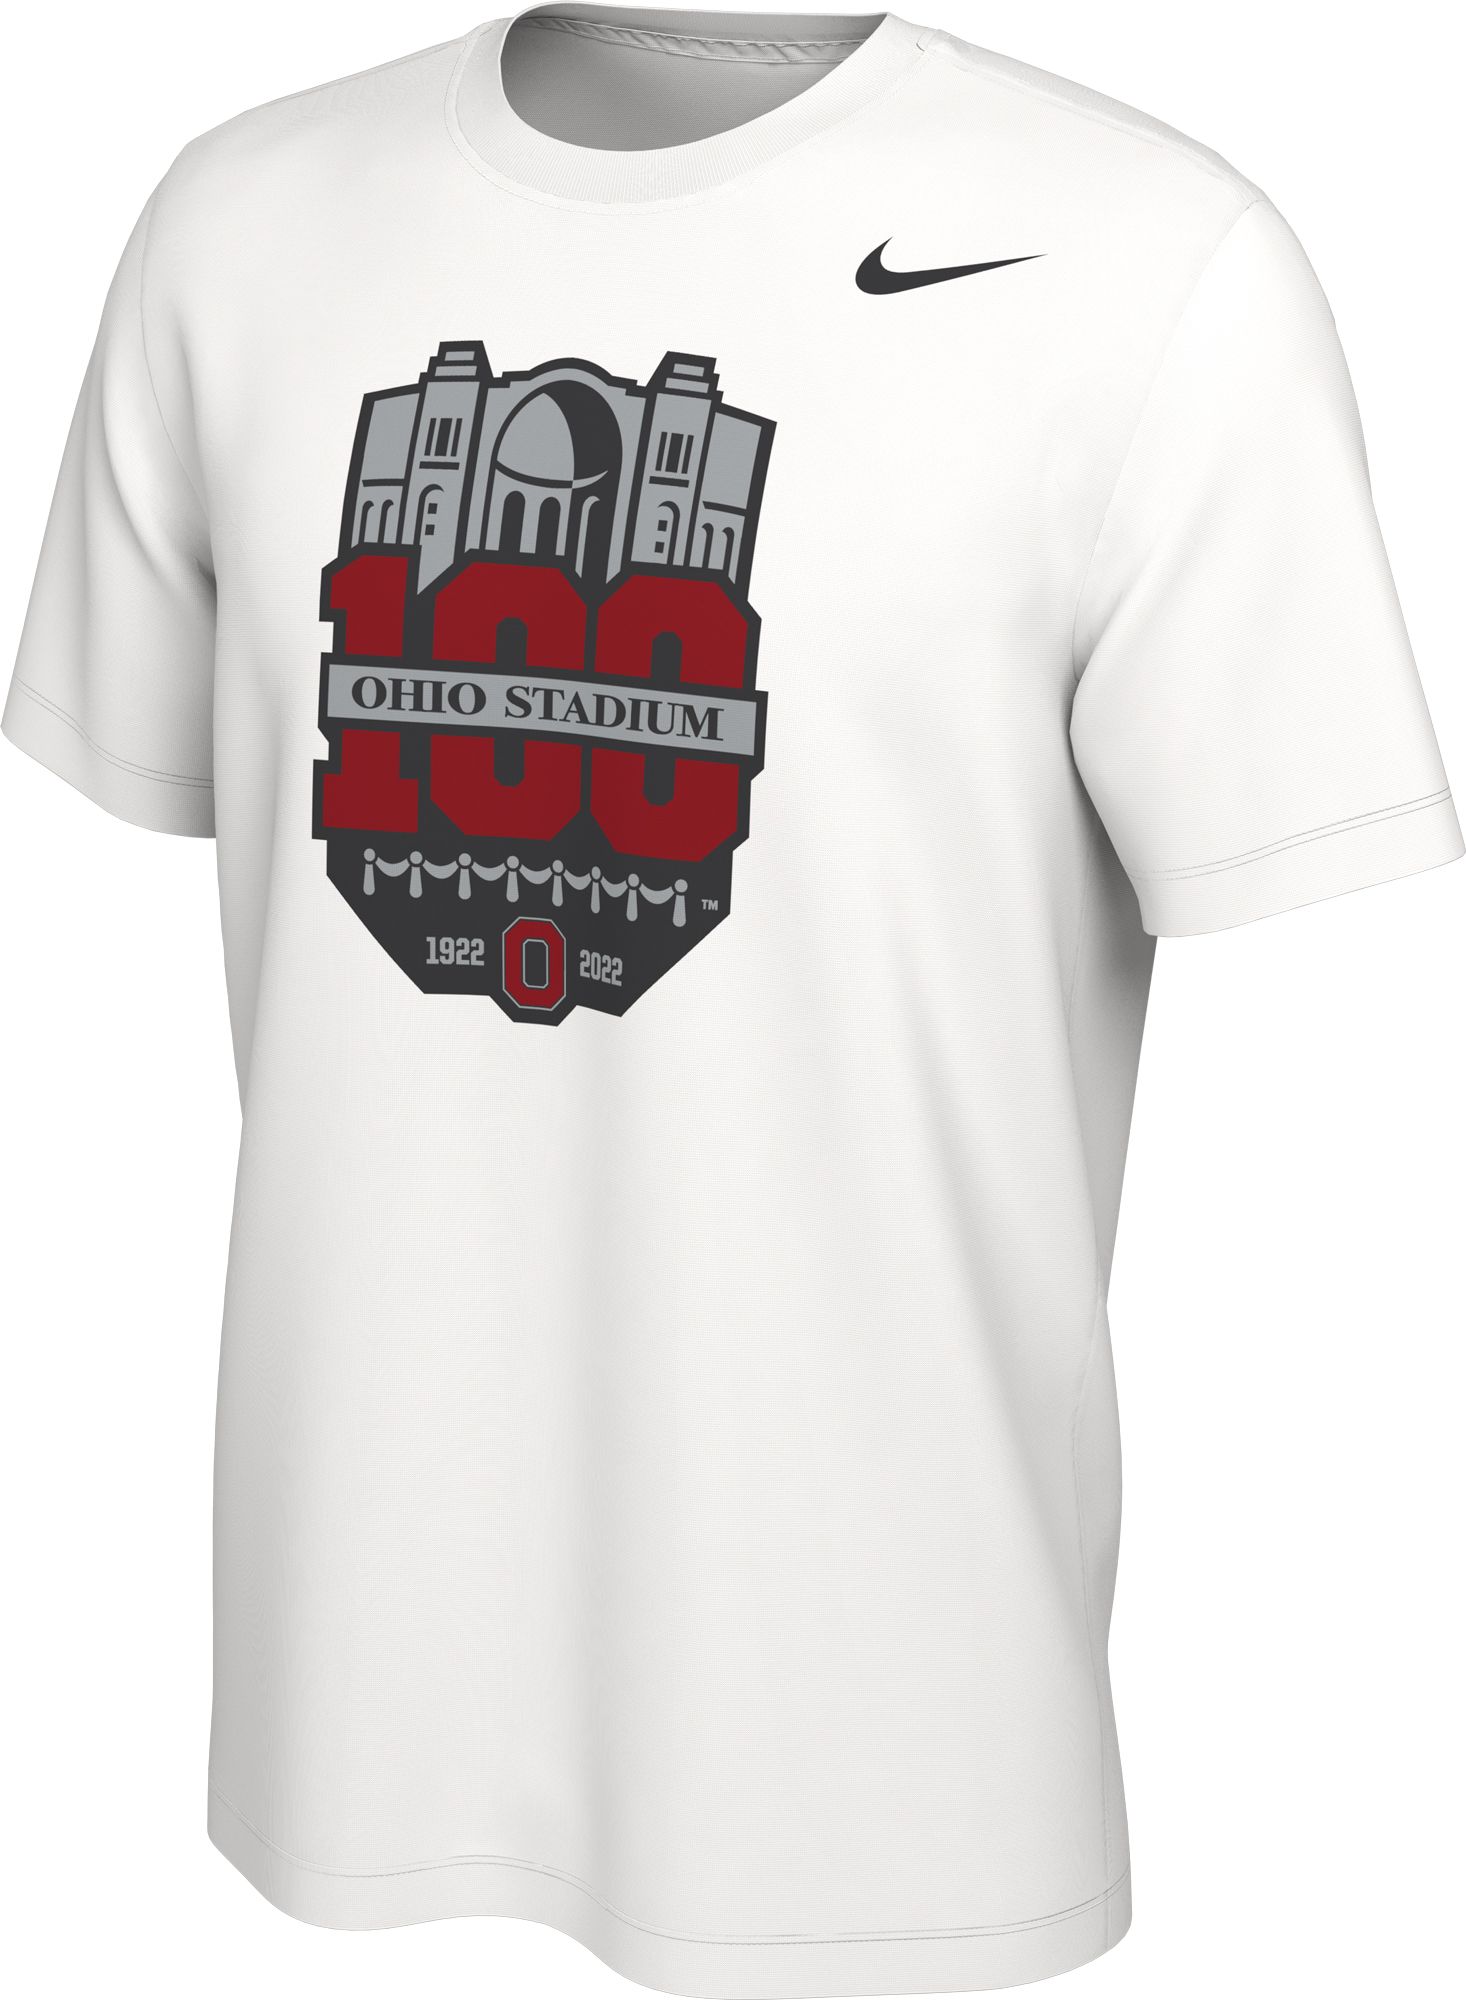 Nike / Youth Philadelphia Phillies Alec Bohm #28 Red T-Shirt